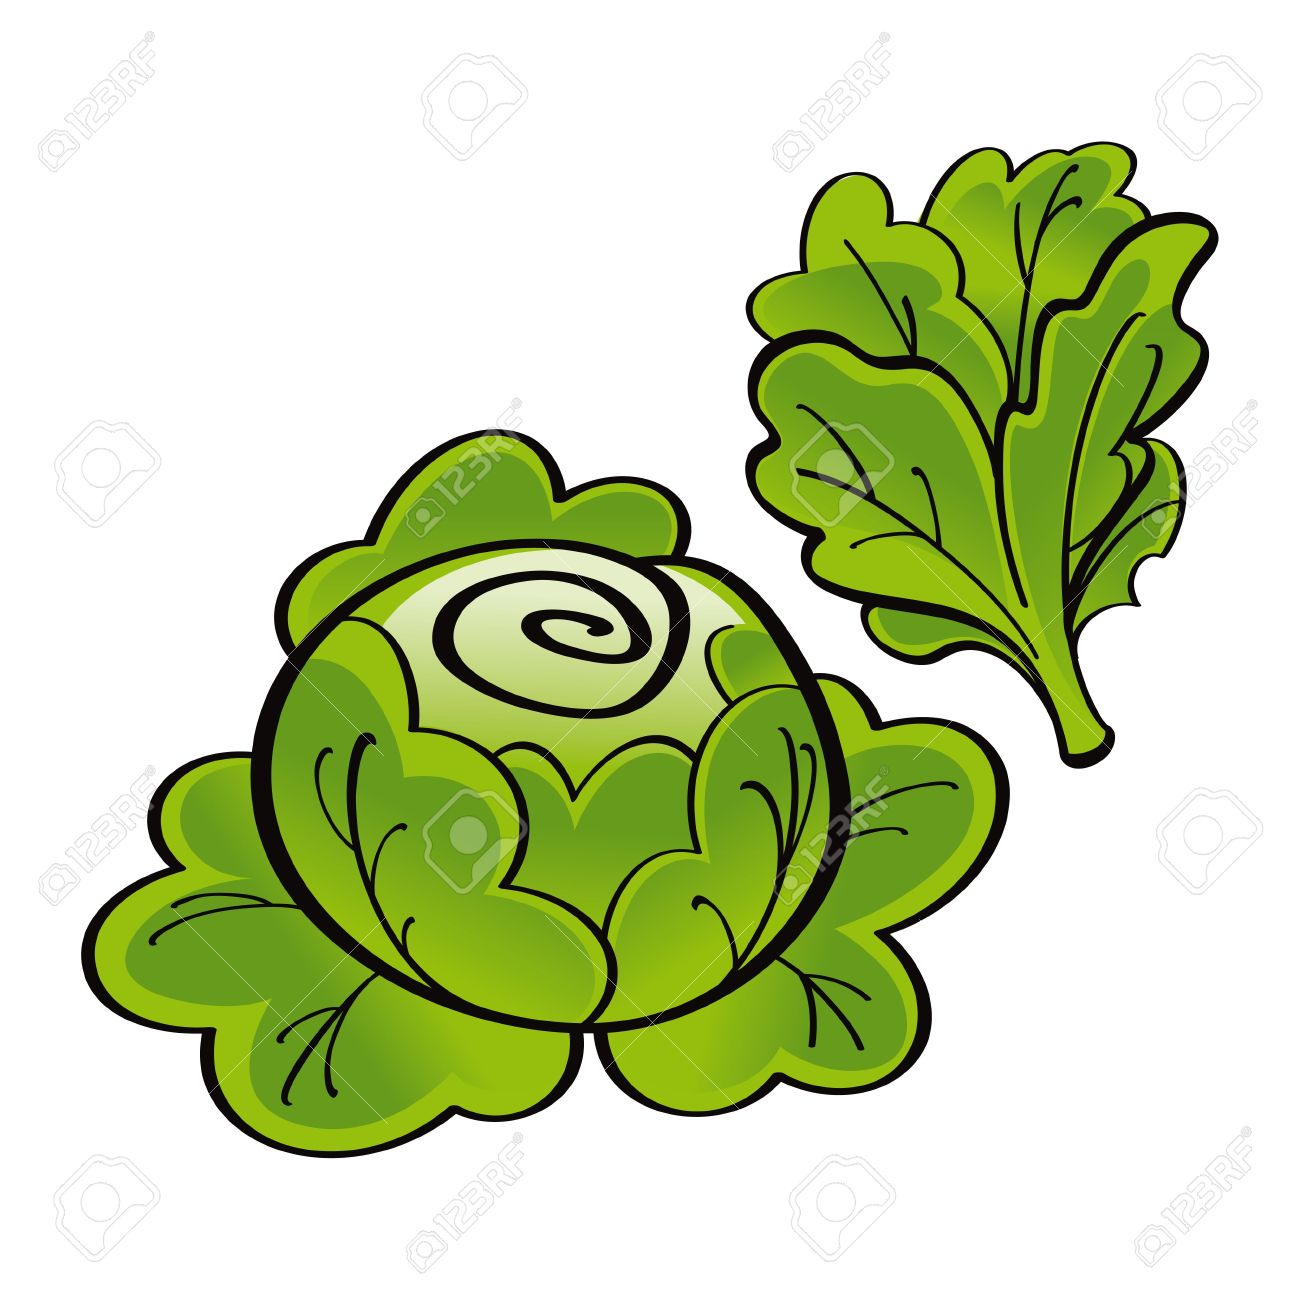 Lettuce clipart lechuga. Free download best on